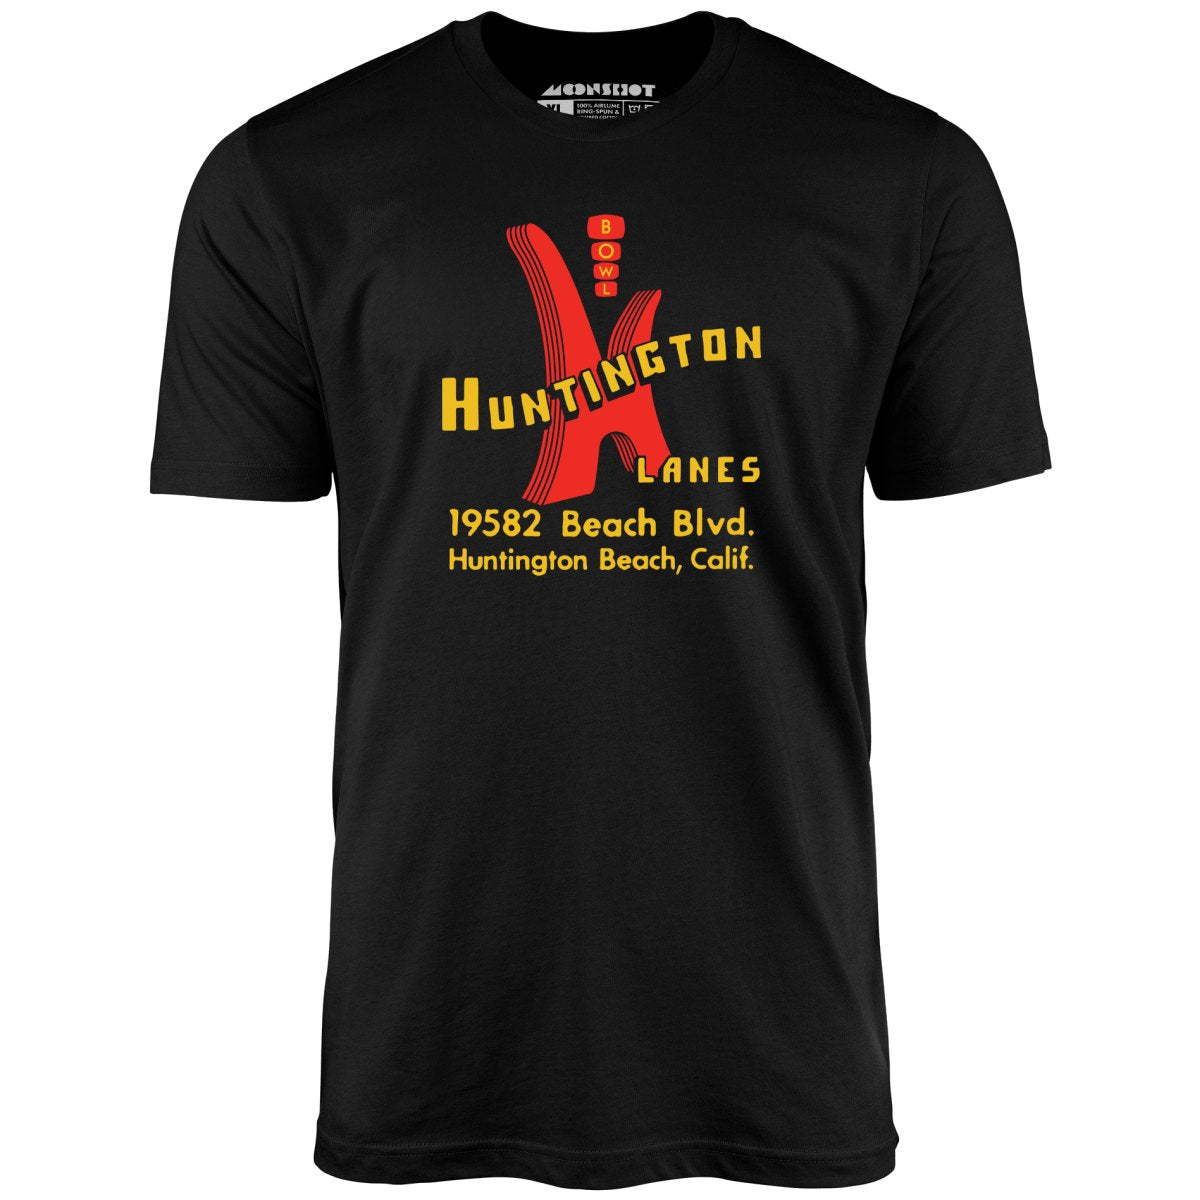 Huntington Lanes - Huntington Beach, CA - Vintage Bowling Alley - Unisex T-Shirt